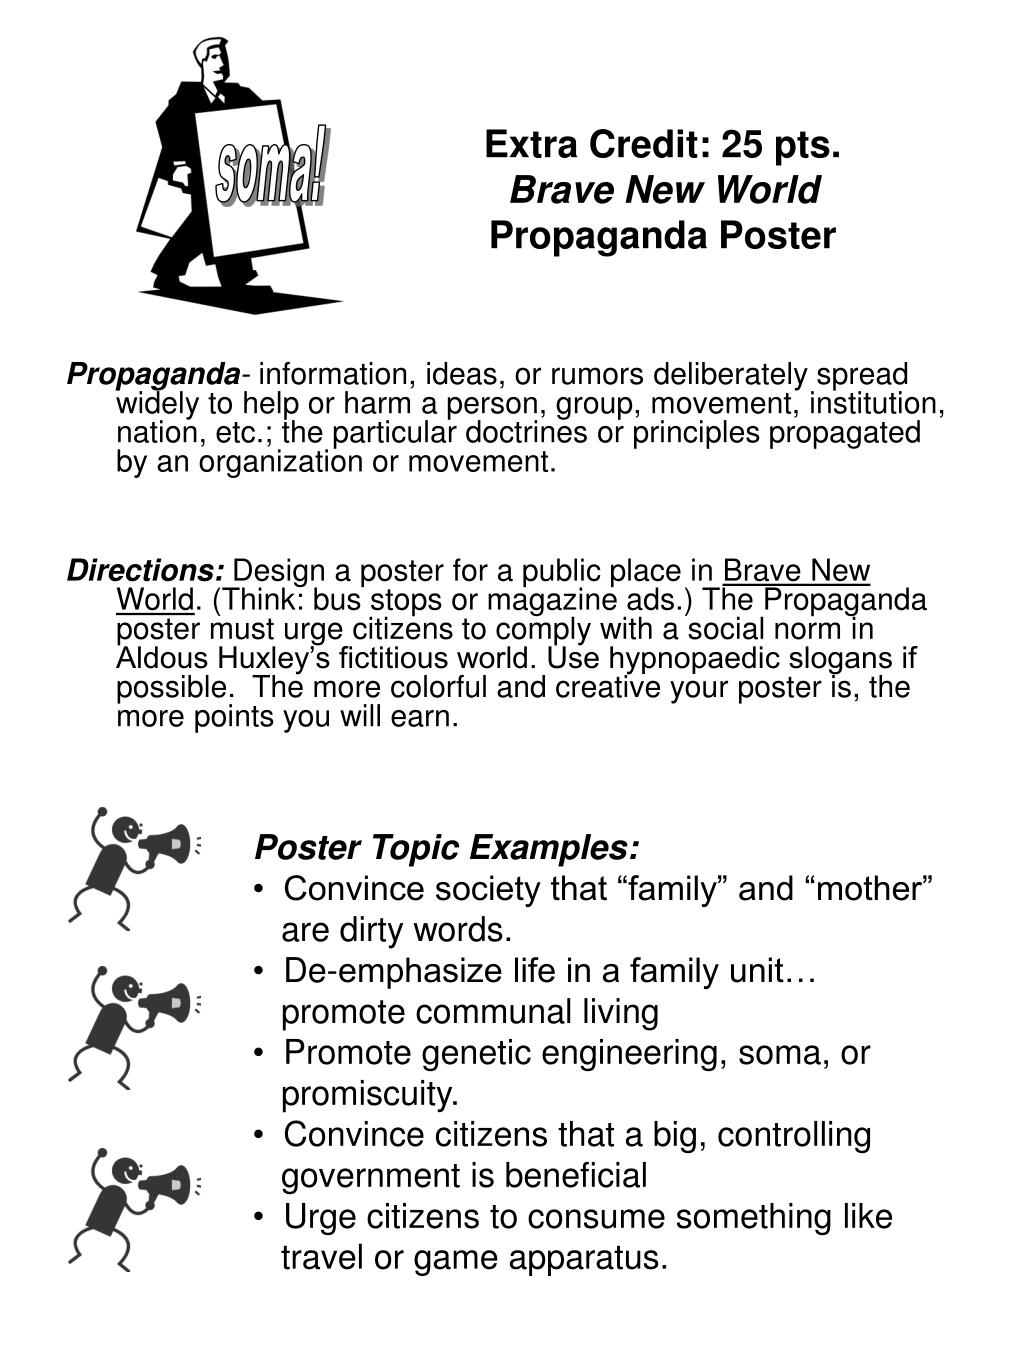 Ppt Extra Credit 25 Pts Brave New World Propaganda Poster Powerpoint Presentation Id